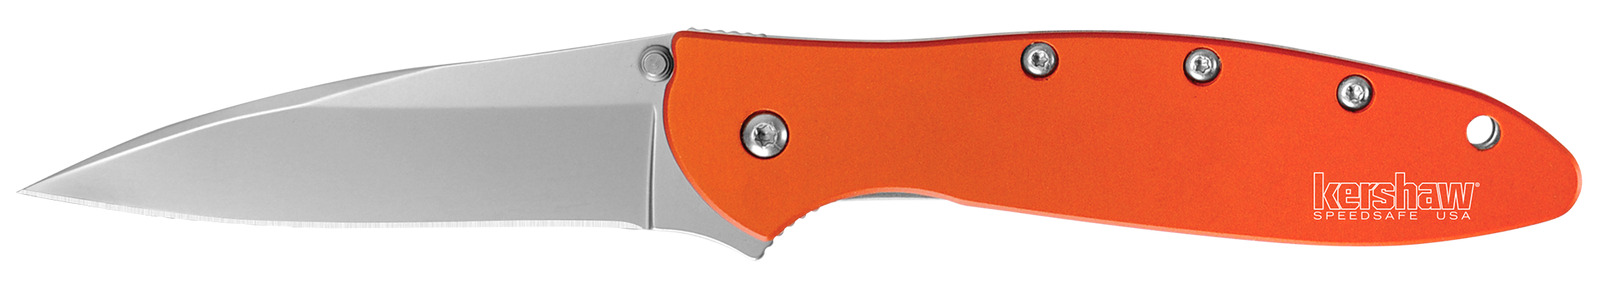 Kershaw Knives Leek Liner Lock Orange Anodized Aluminum 14C28N Stainless 1660OR